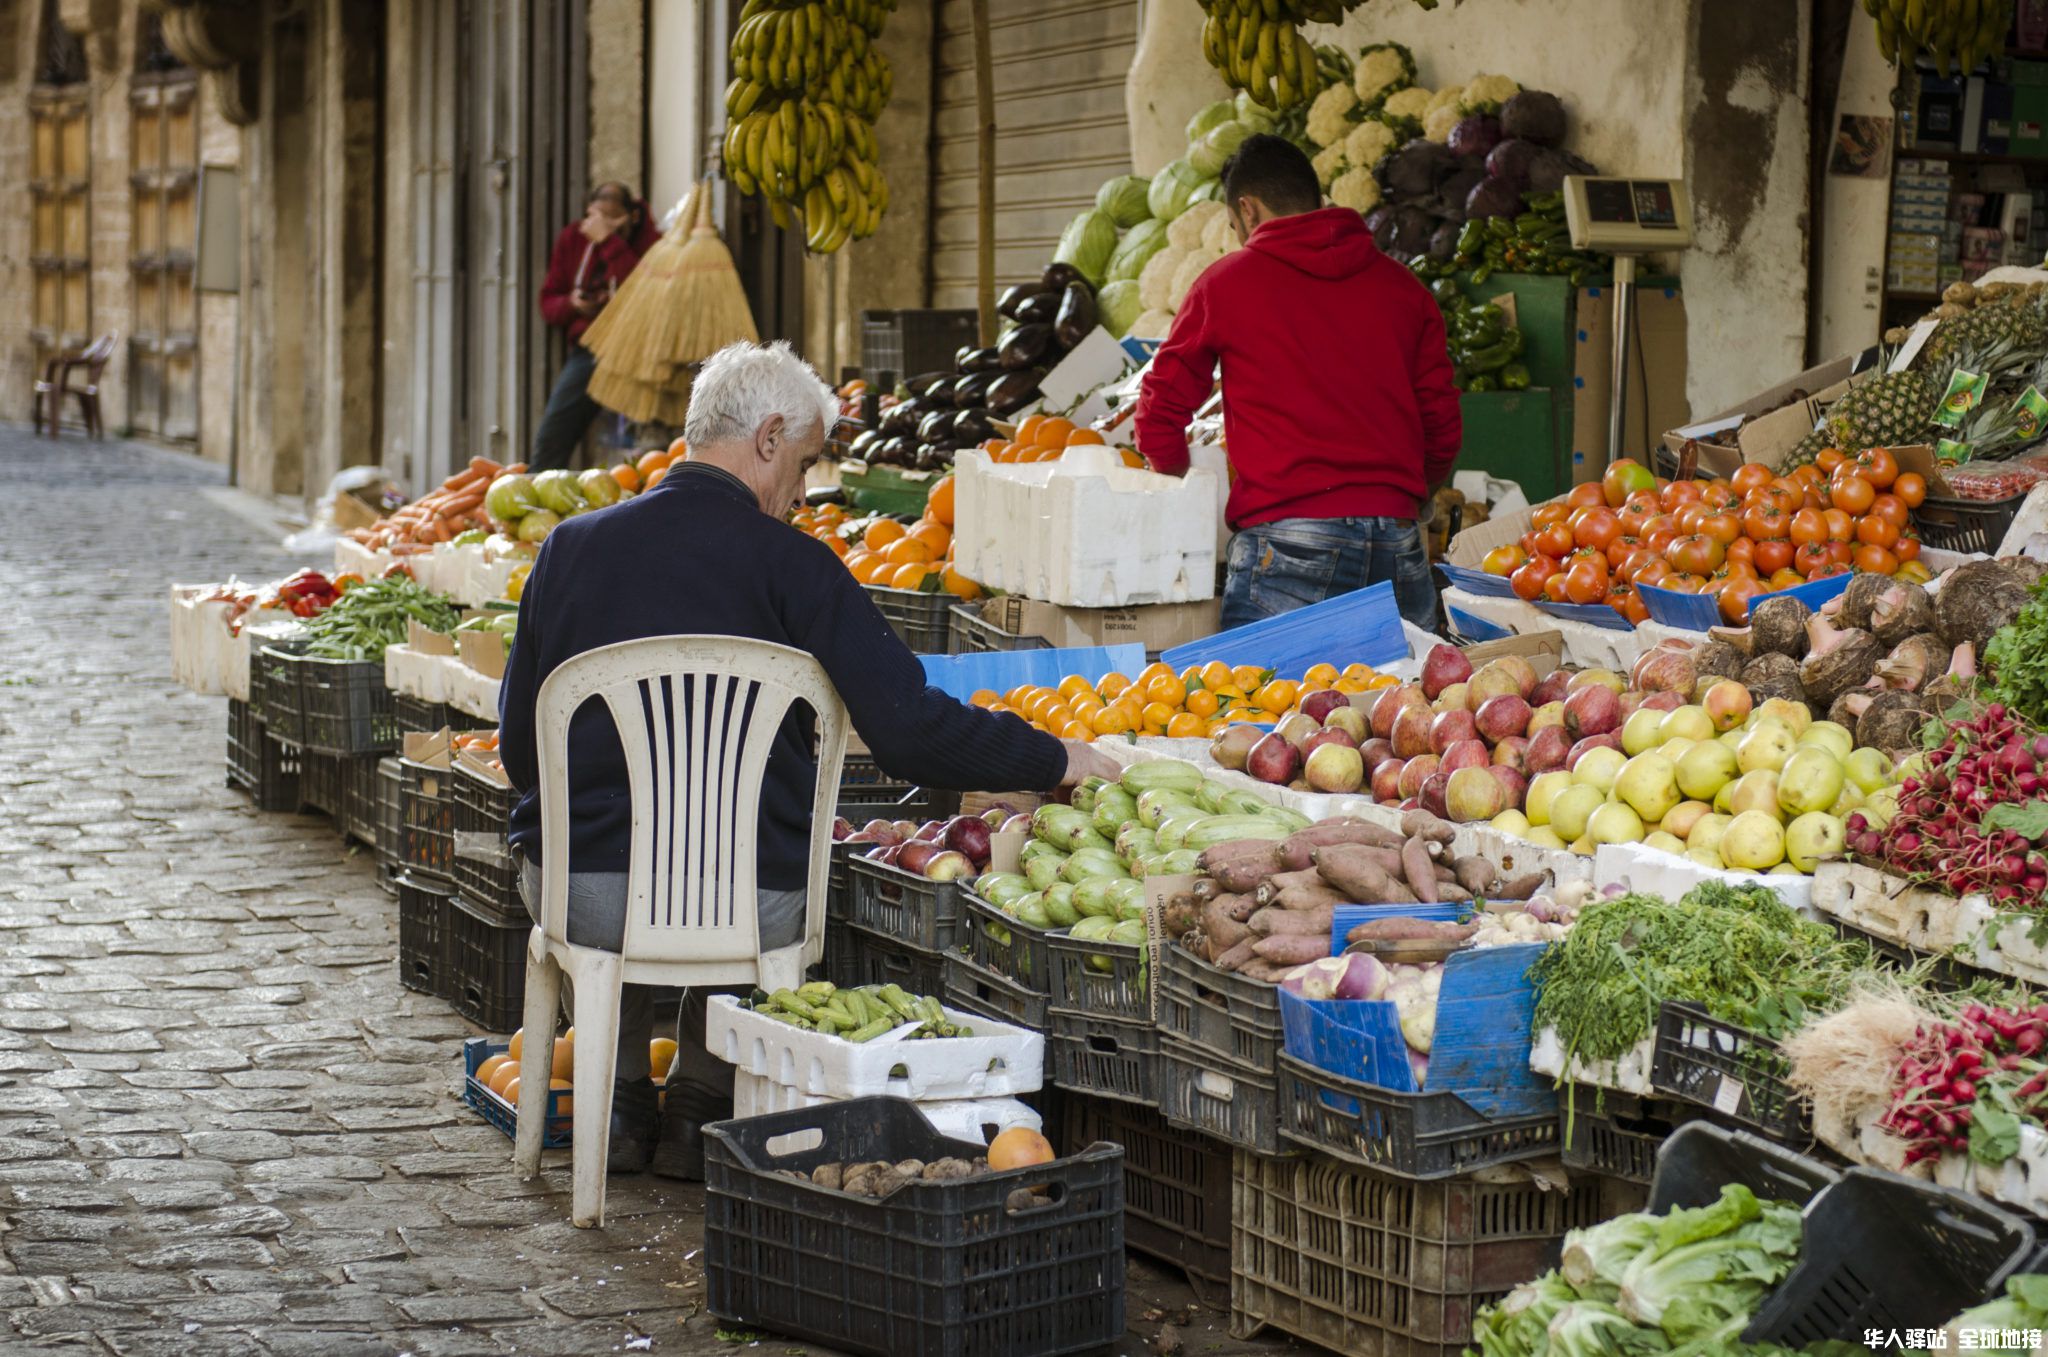 Things-to-do-in-Lebanon-Market-Stall.jpg